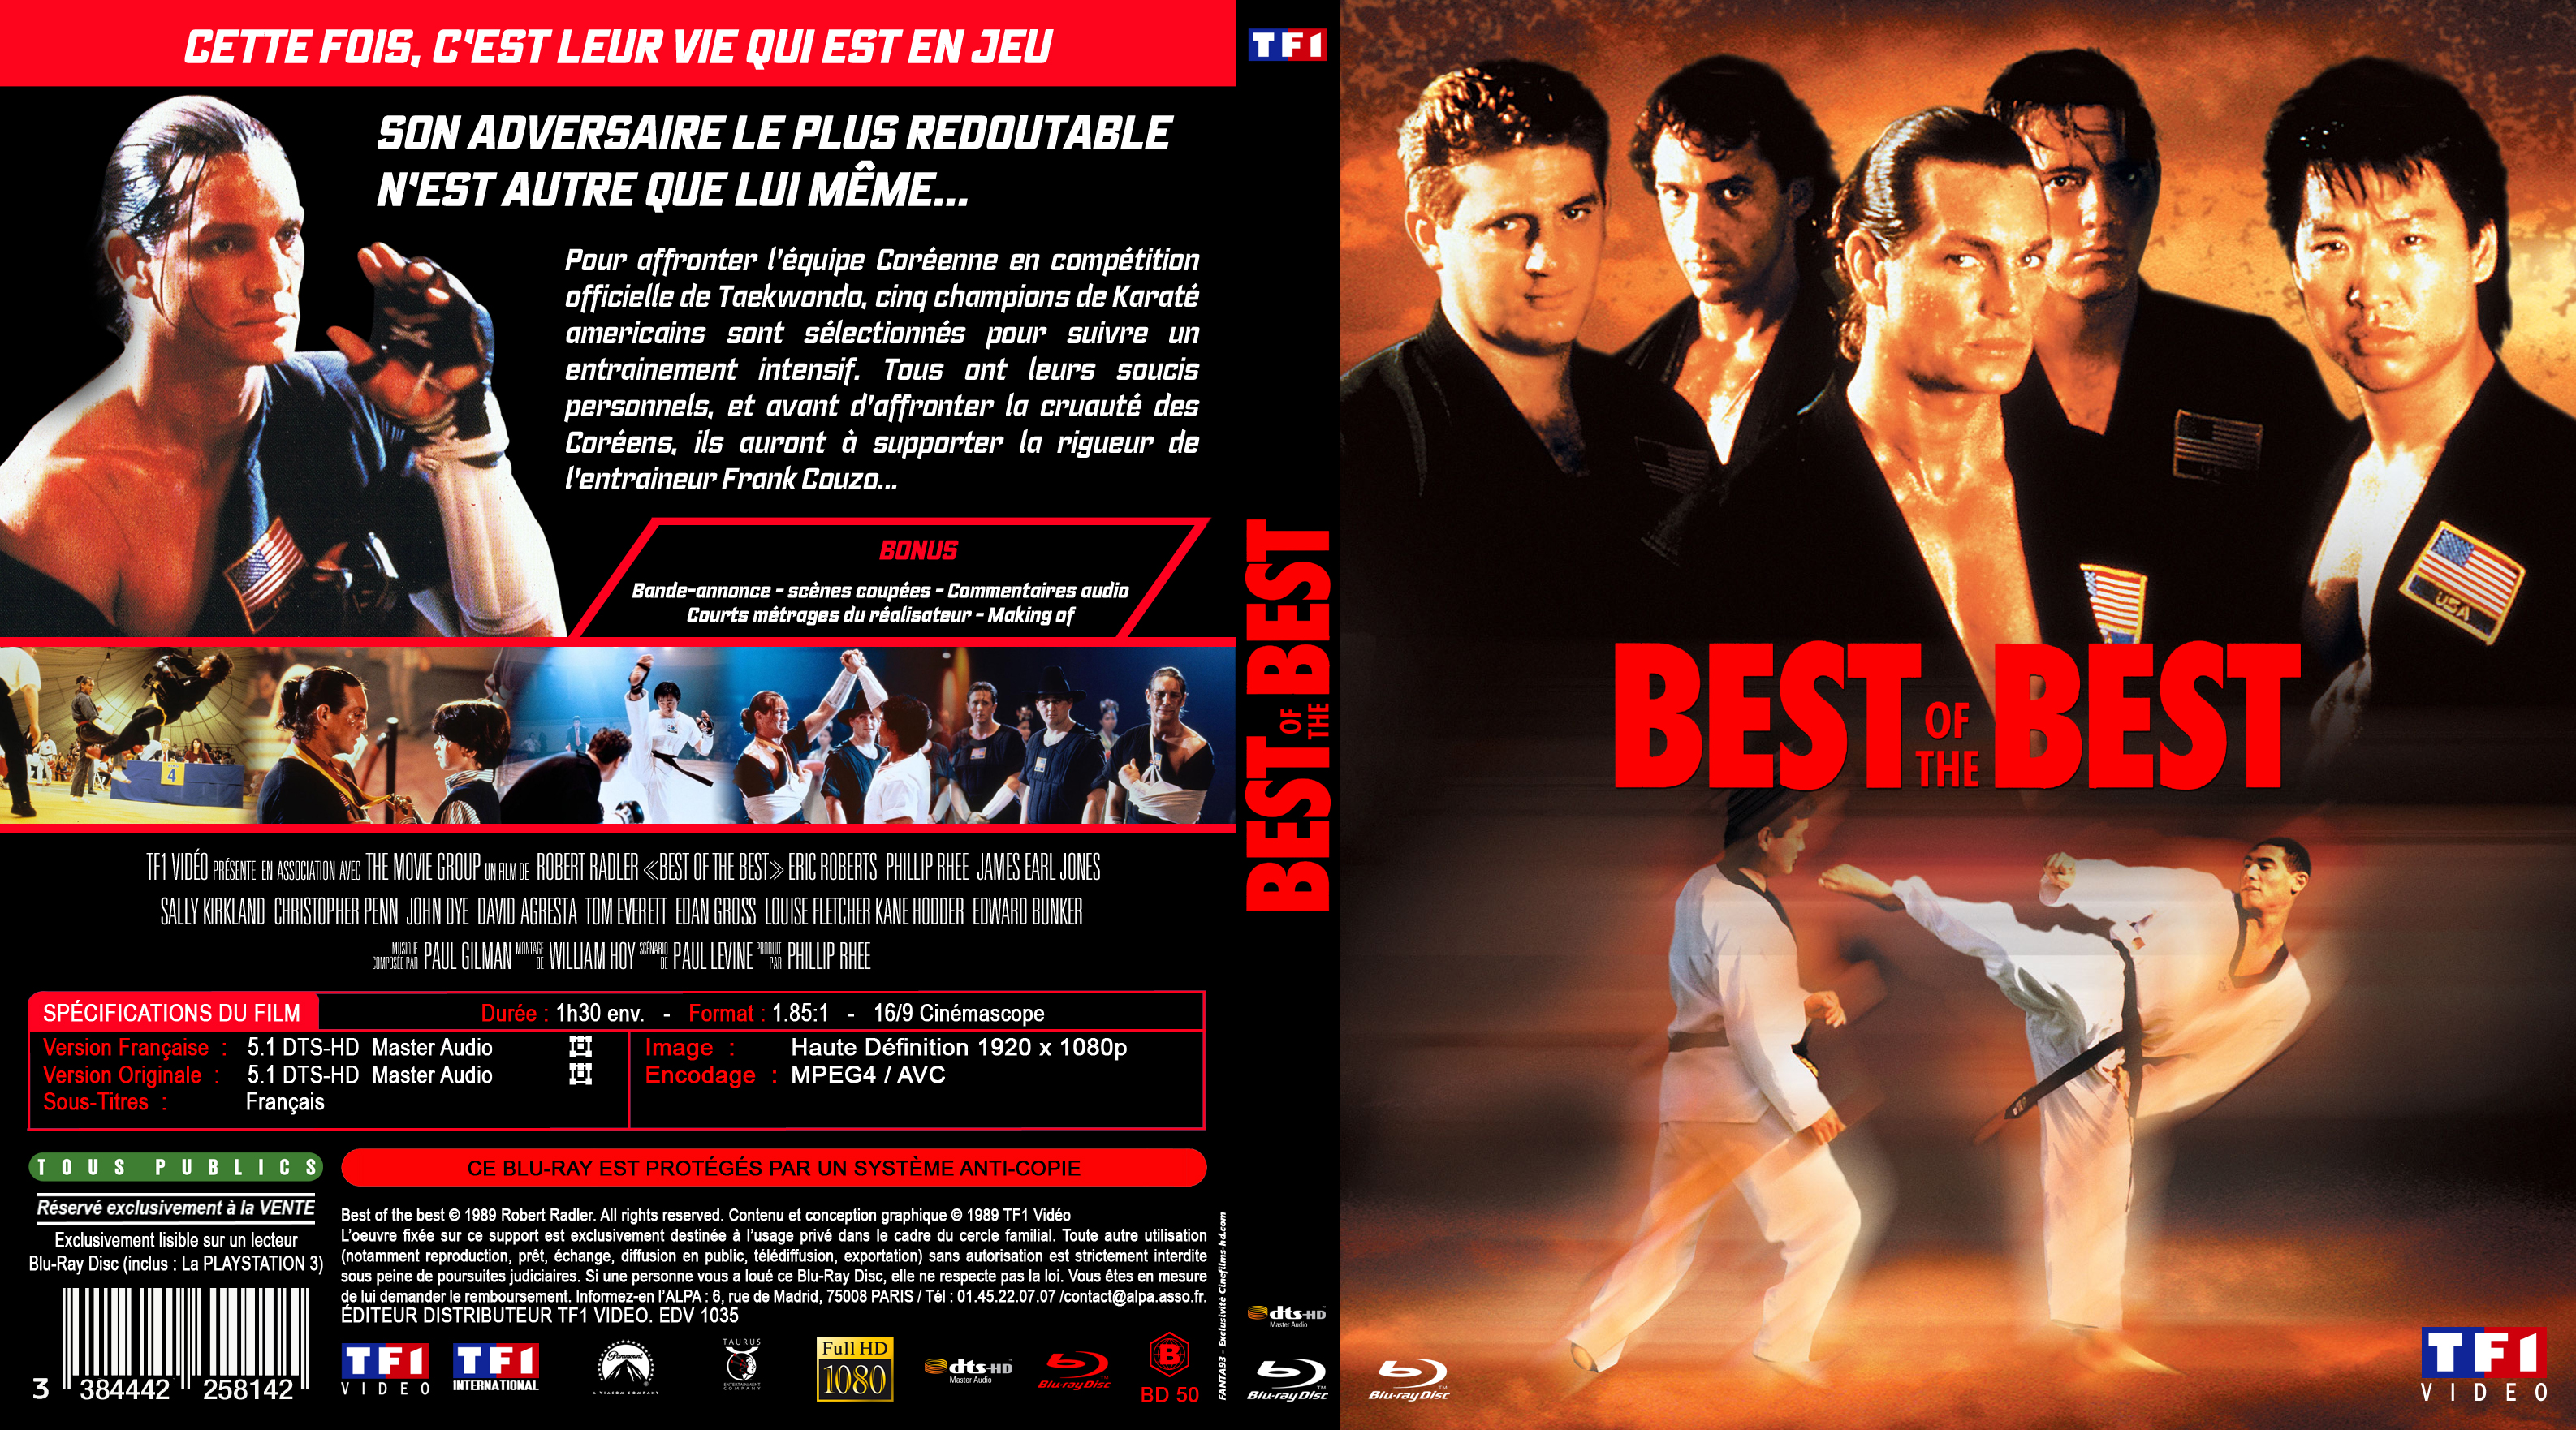 Jaquette Dvd De Best Of The Best Custom Blu Ray Cinéma Passion